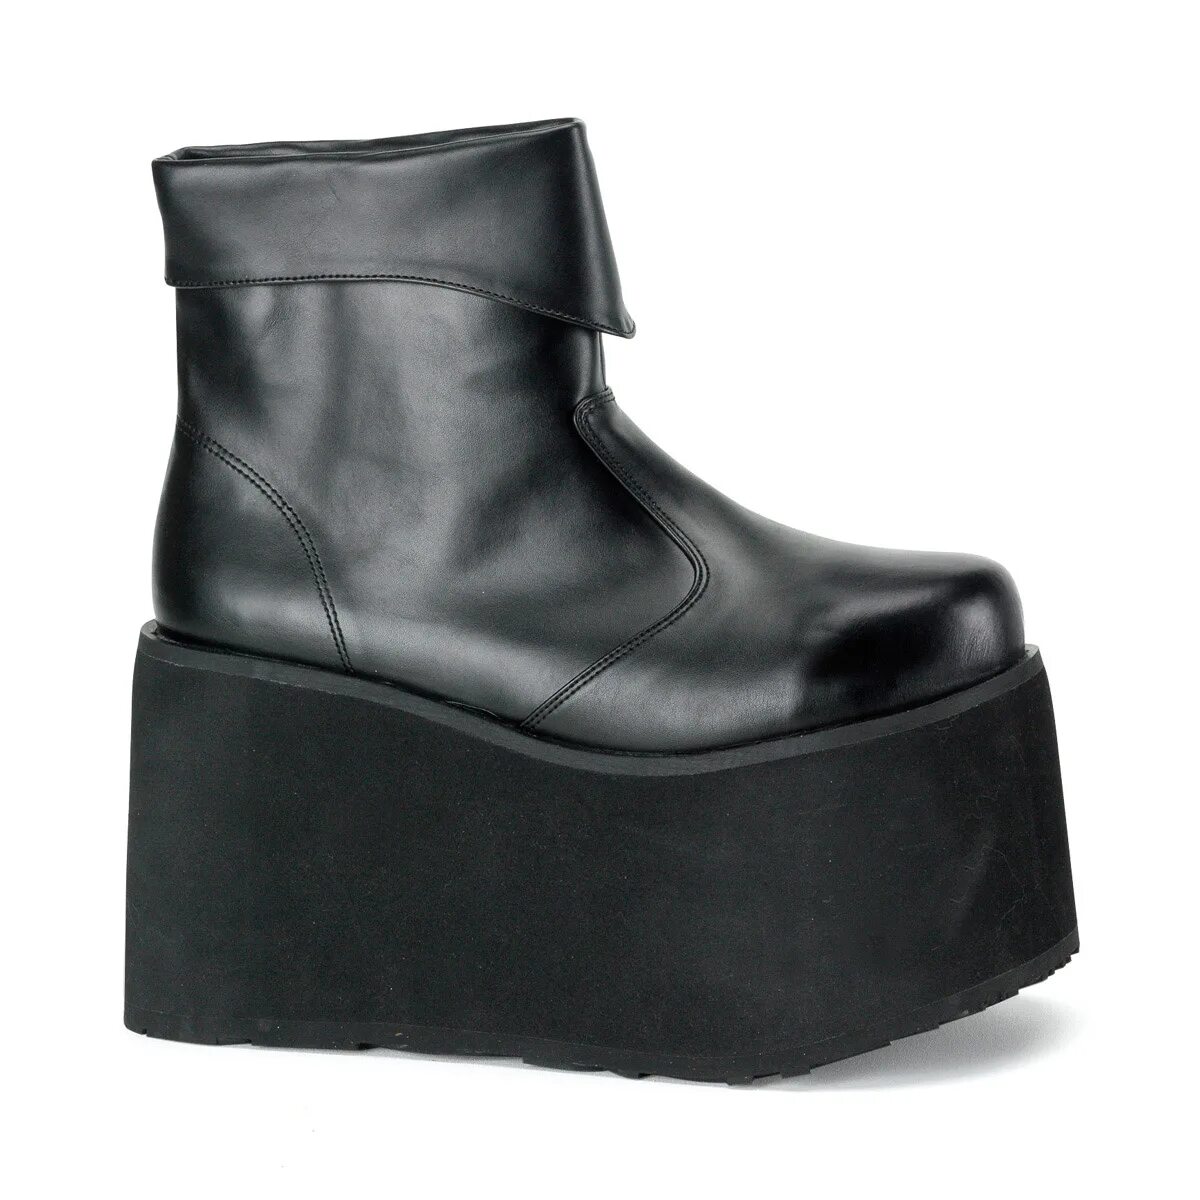 Сапоги Demonia Mega 602. Berkonty ботинки на платформе. Ботинки на платформе мужские. Мужские ботинки на высокой платформе. Мужская обувь на платформе